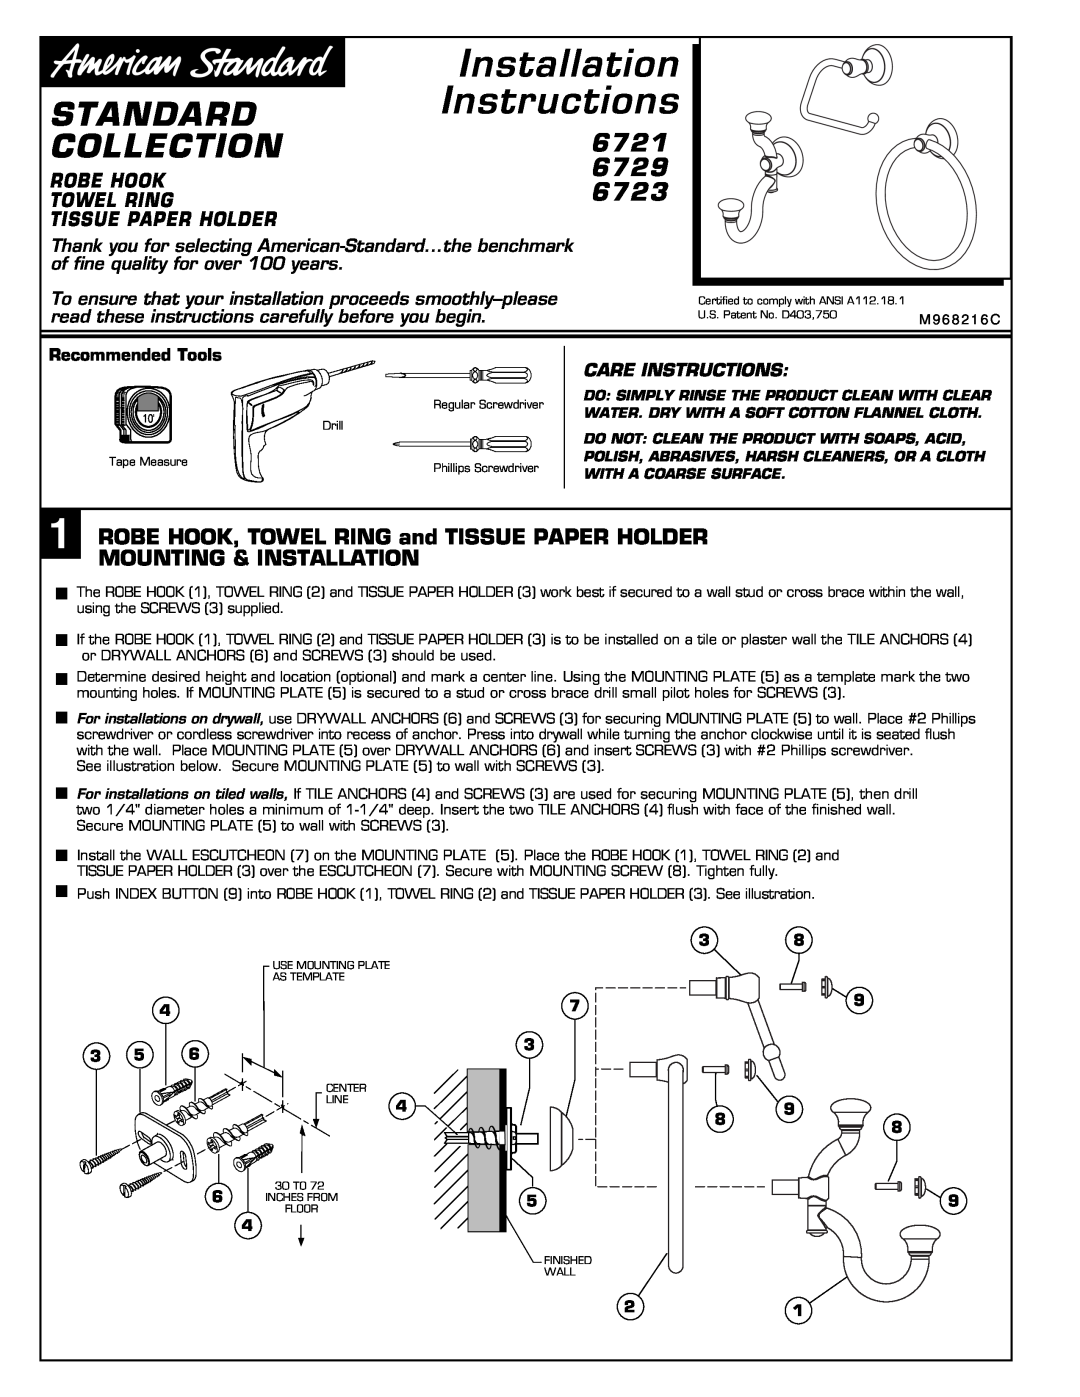 American Standard 6721 installation instructions Standard, Collection, 6729, 6723, Care Instructions, Installation 